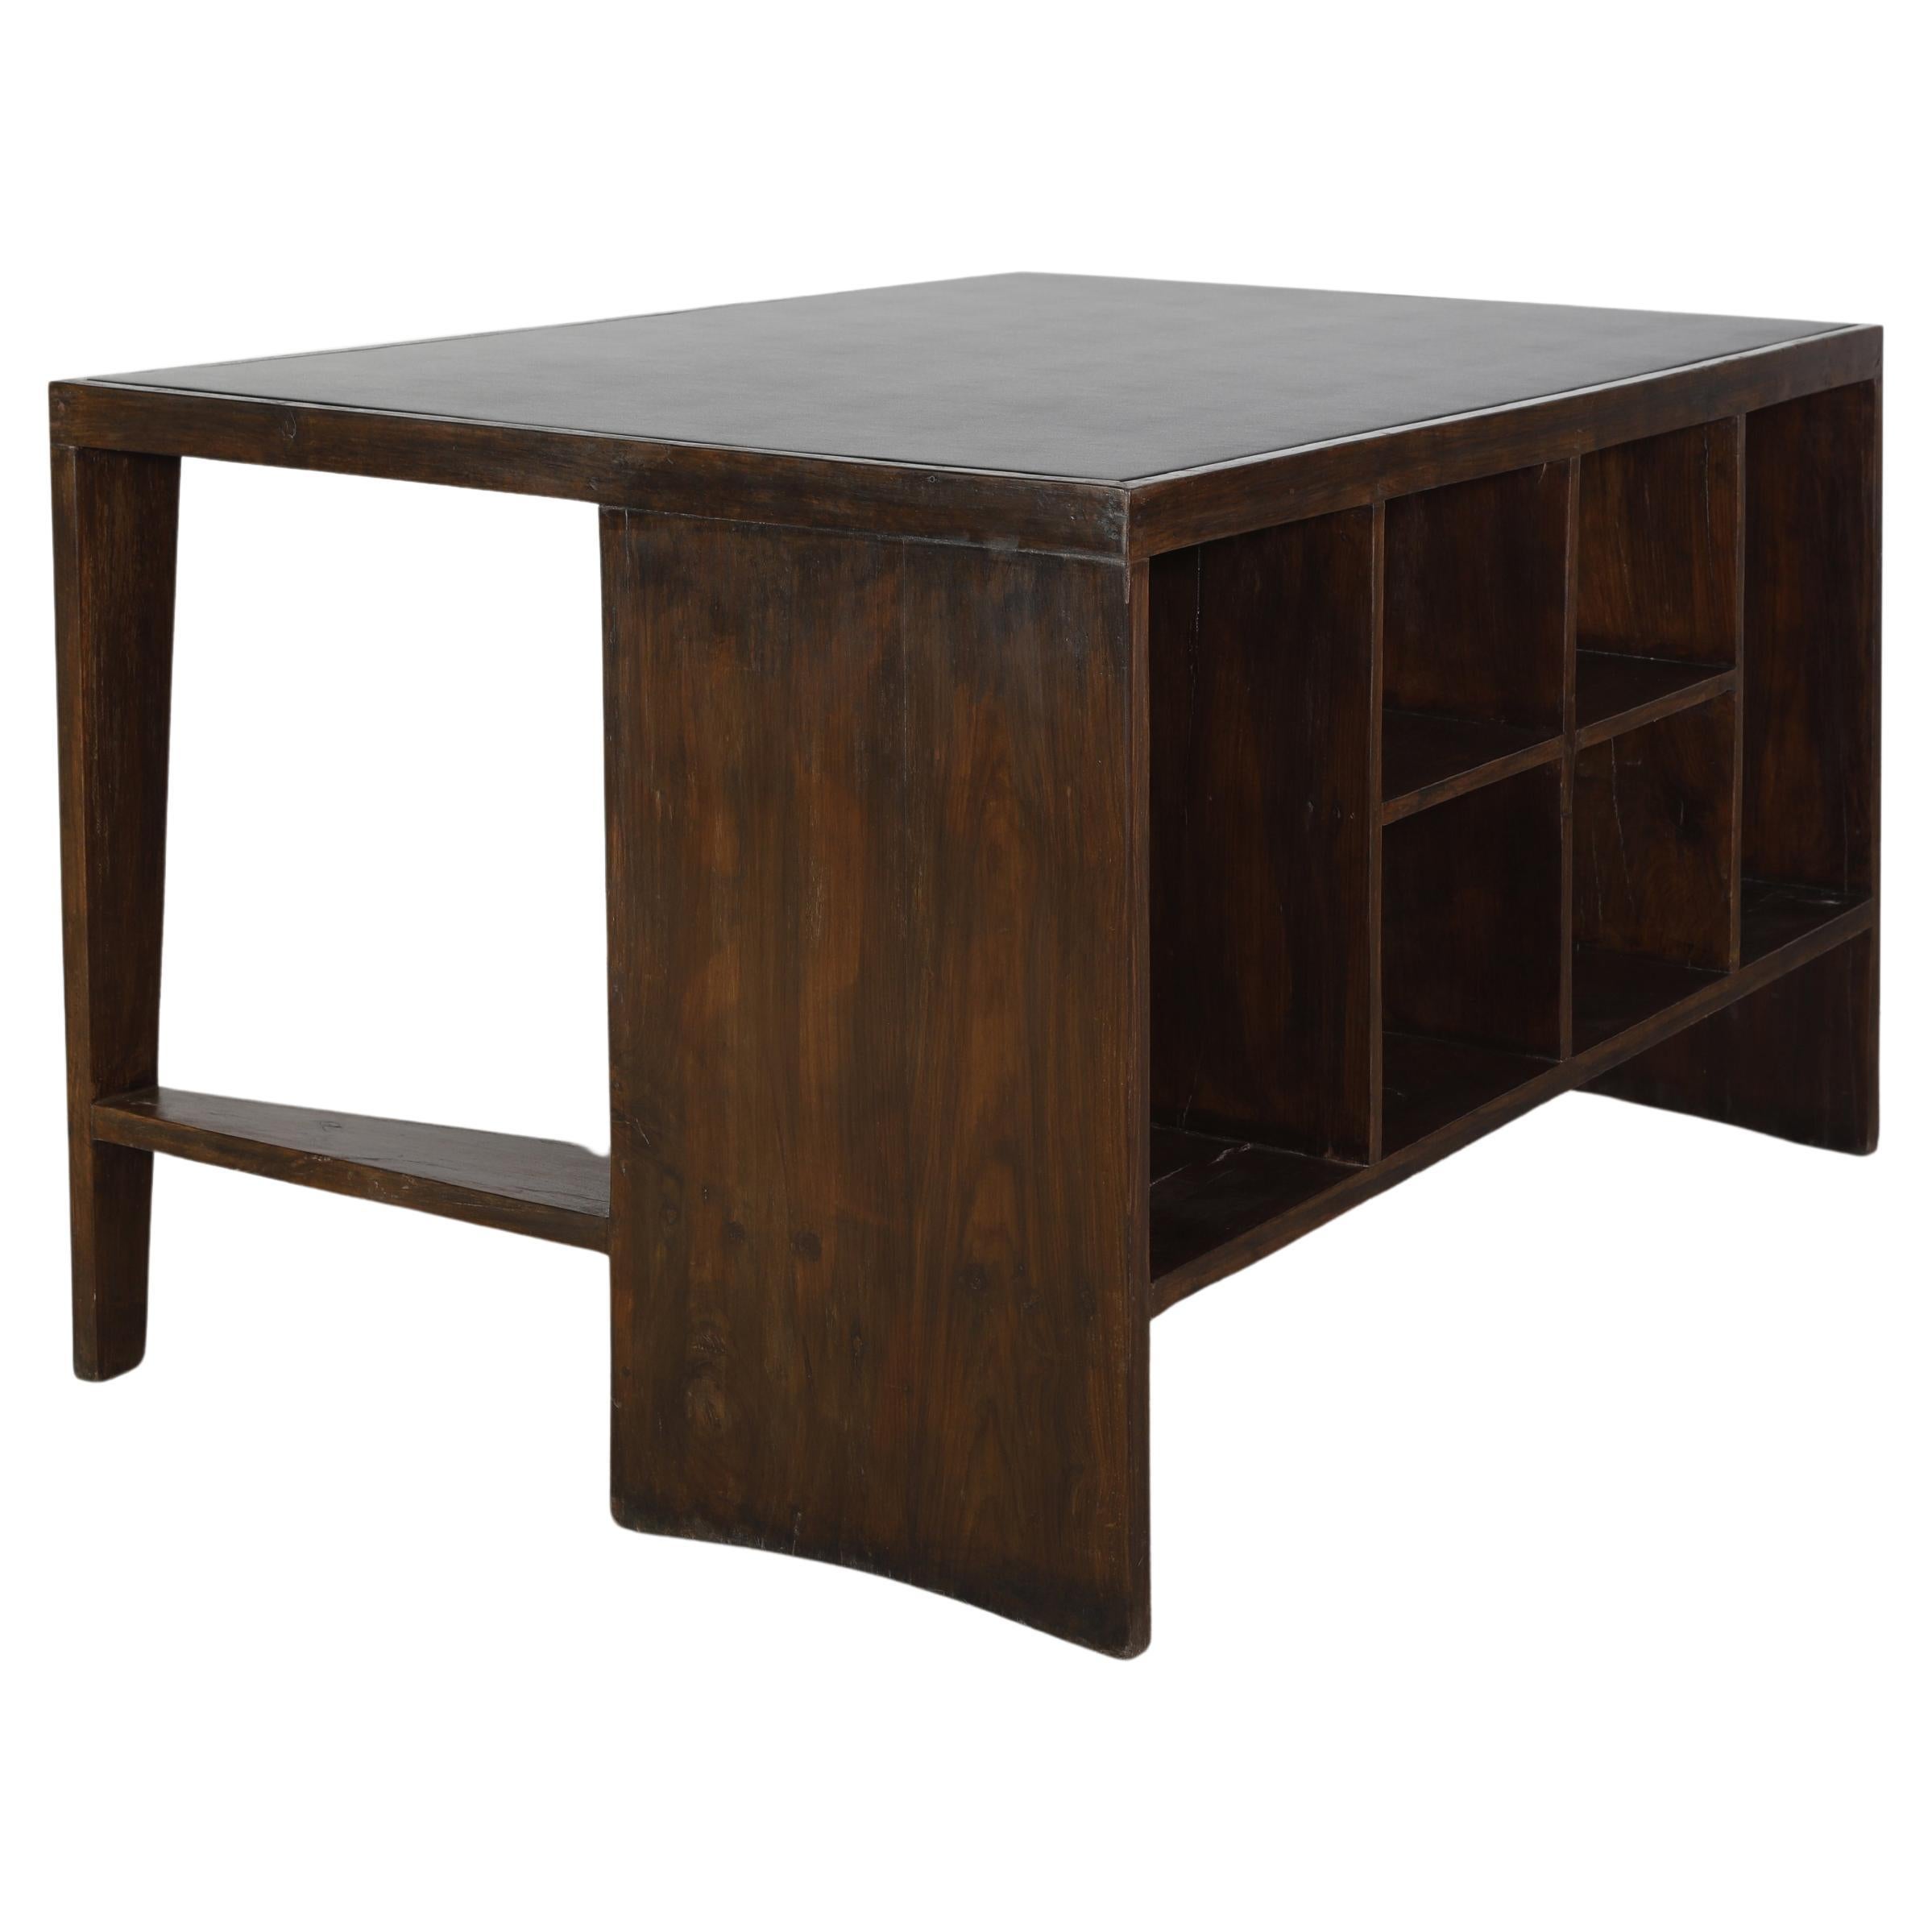 Pierre Jeanneret PJ-BU-02 Clark Table / Authentic Mid-Century Modern, Chandigarh For Sale